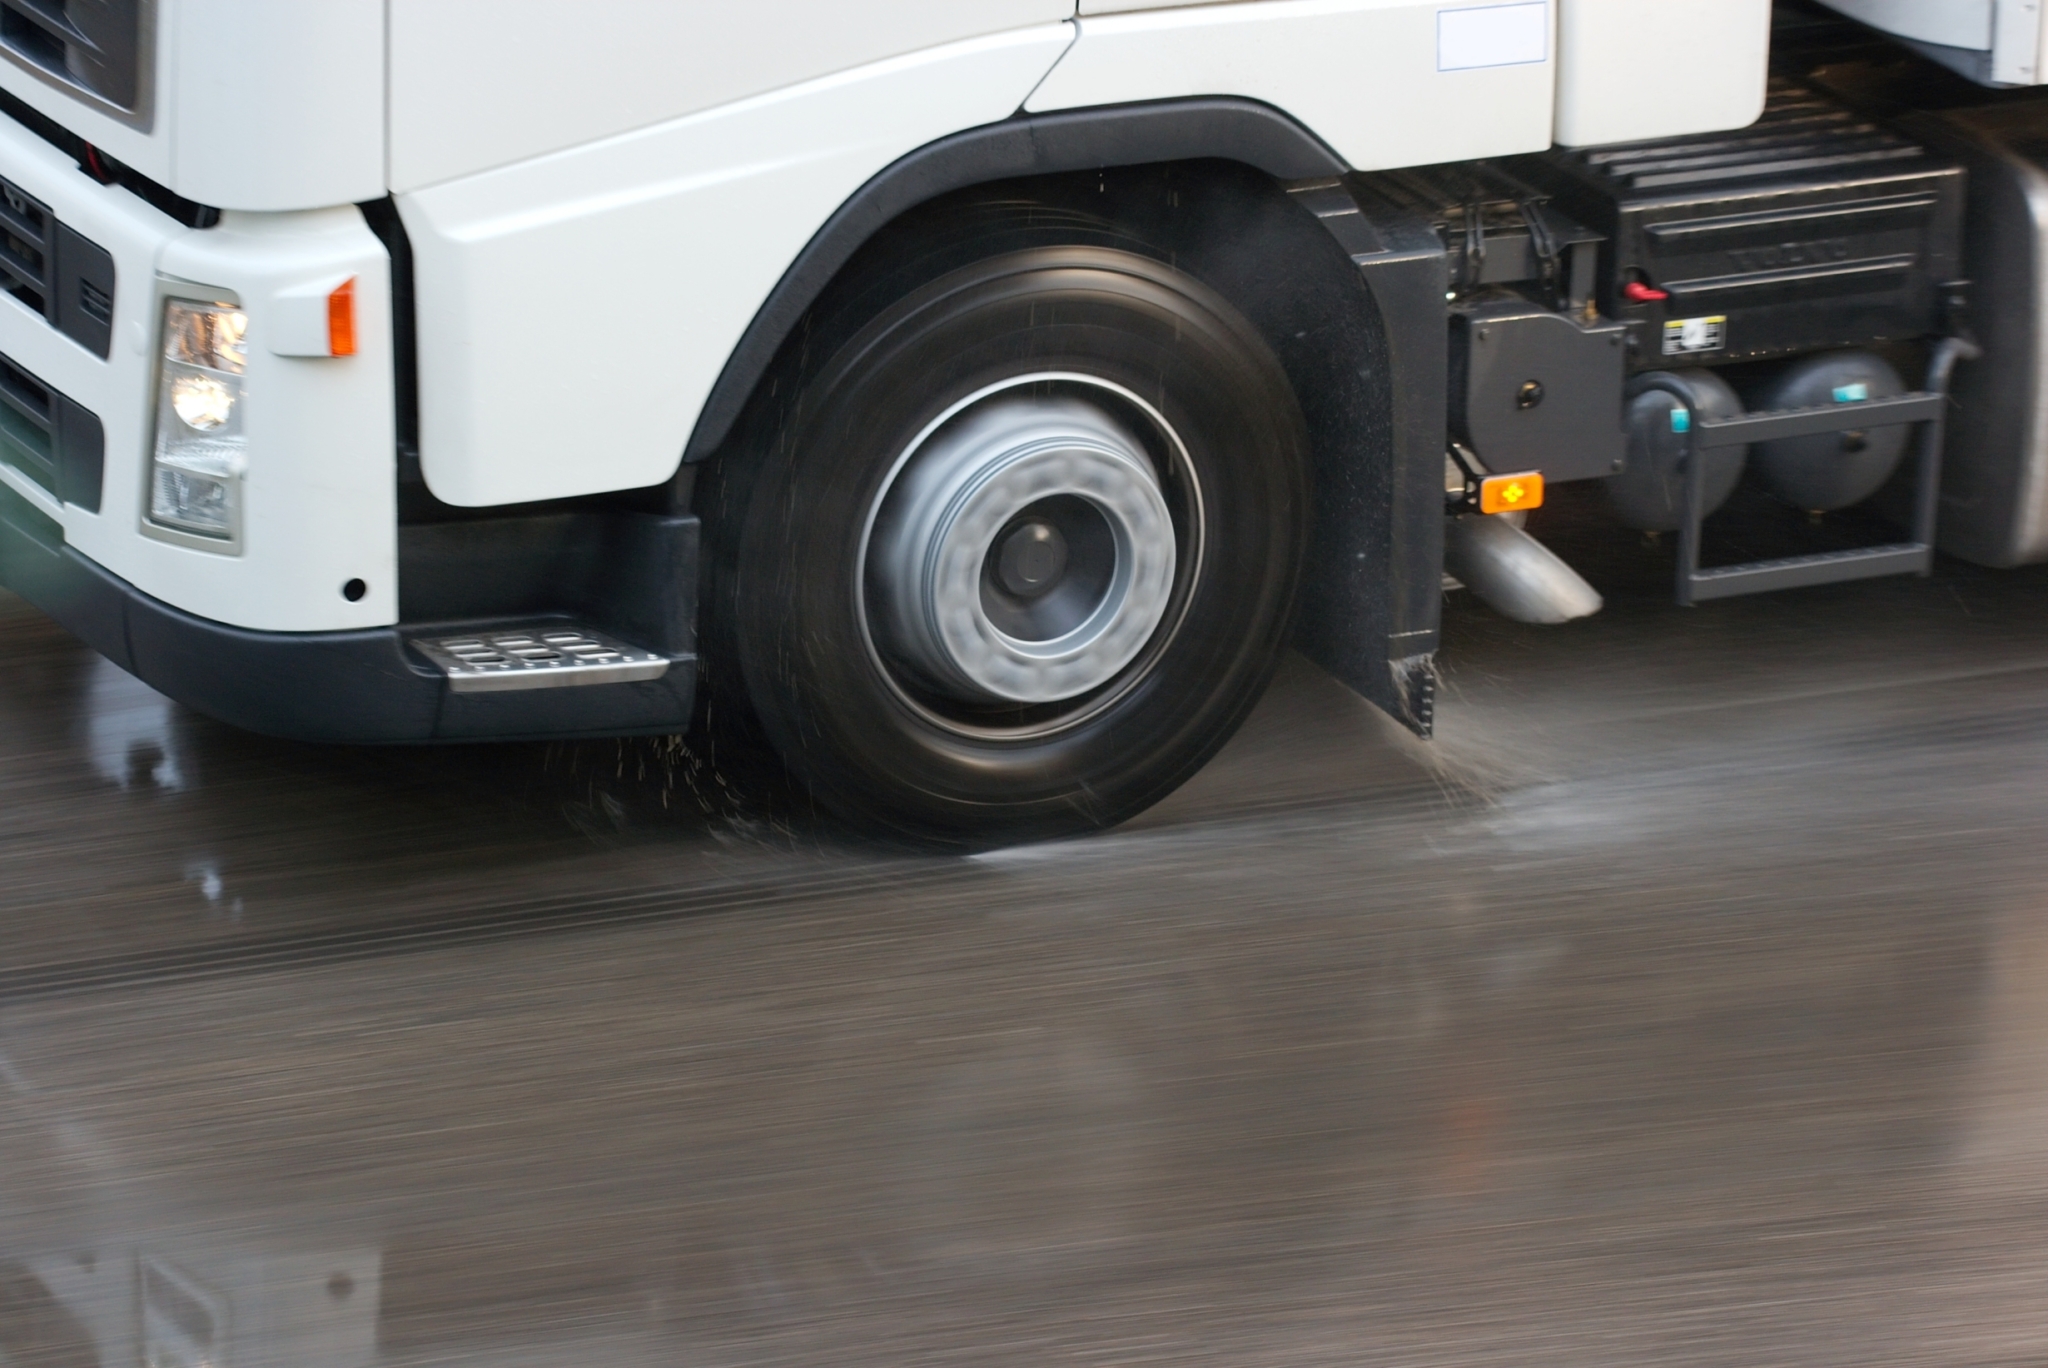 Old tyre ban could result in better part worn regulation – TyreSafe